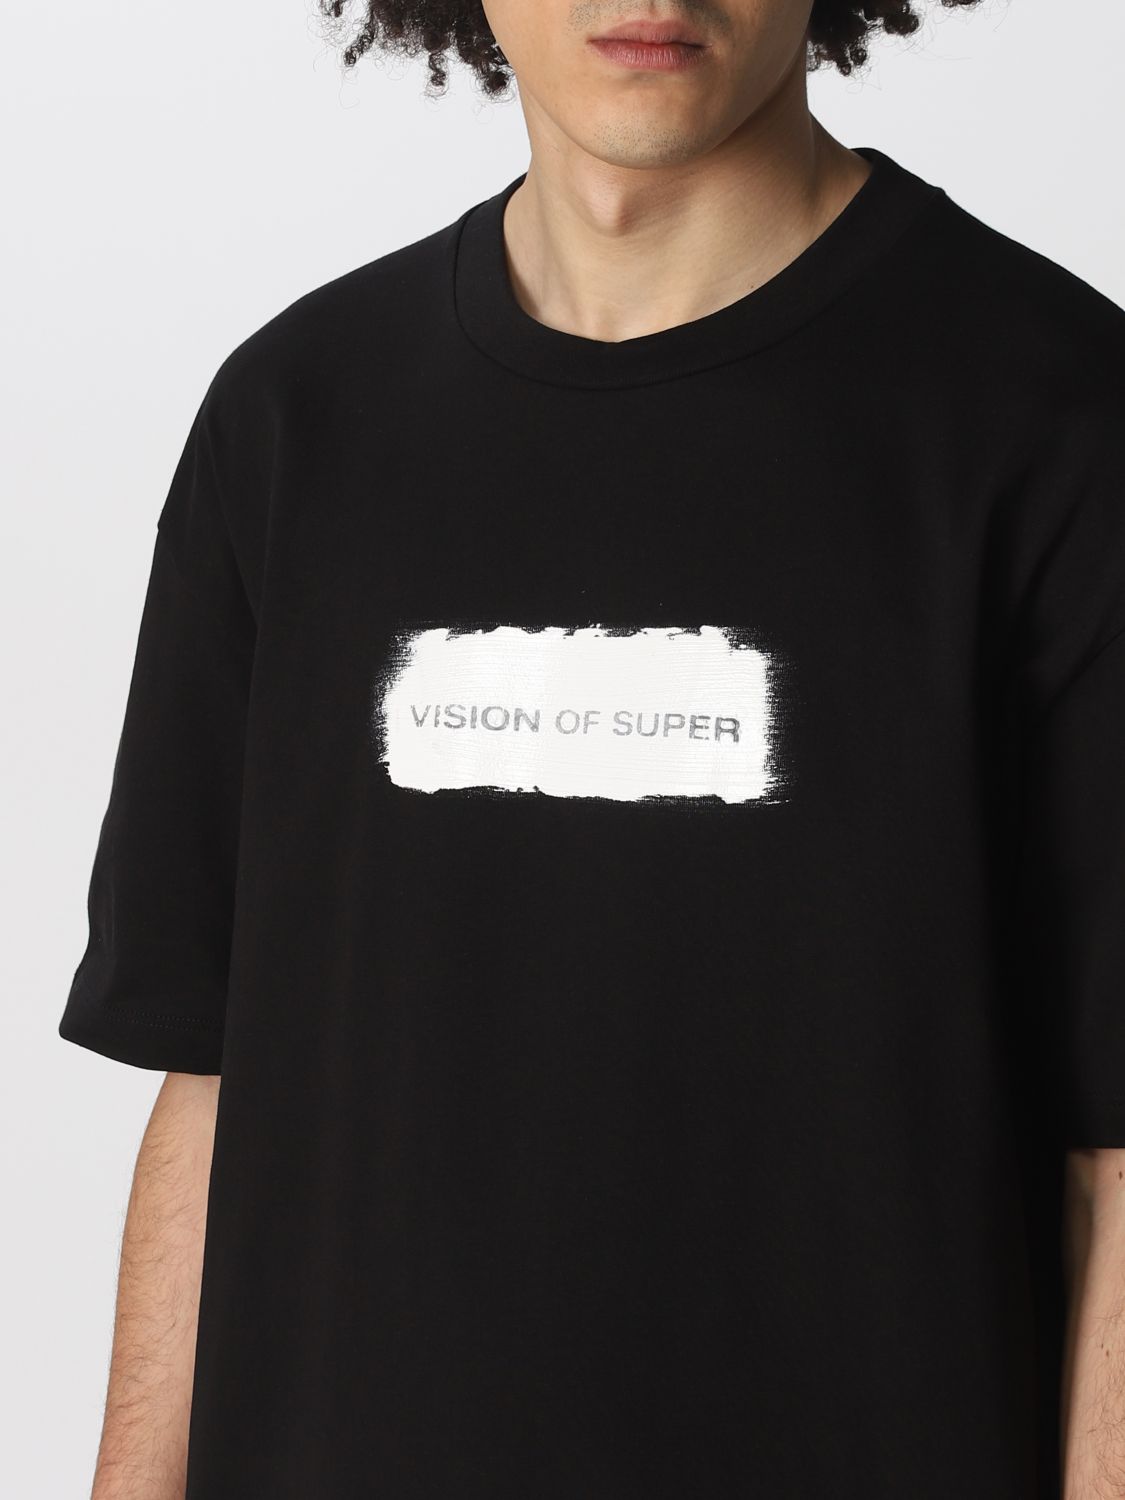 Tシャツ Vision Of Super: Tシャツ メンズ Vision Of Super ブラック 3